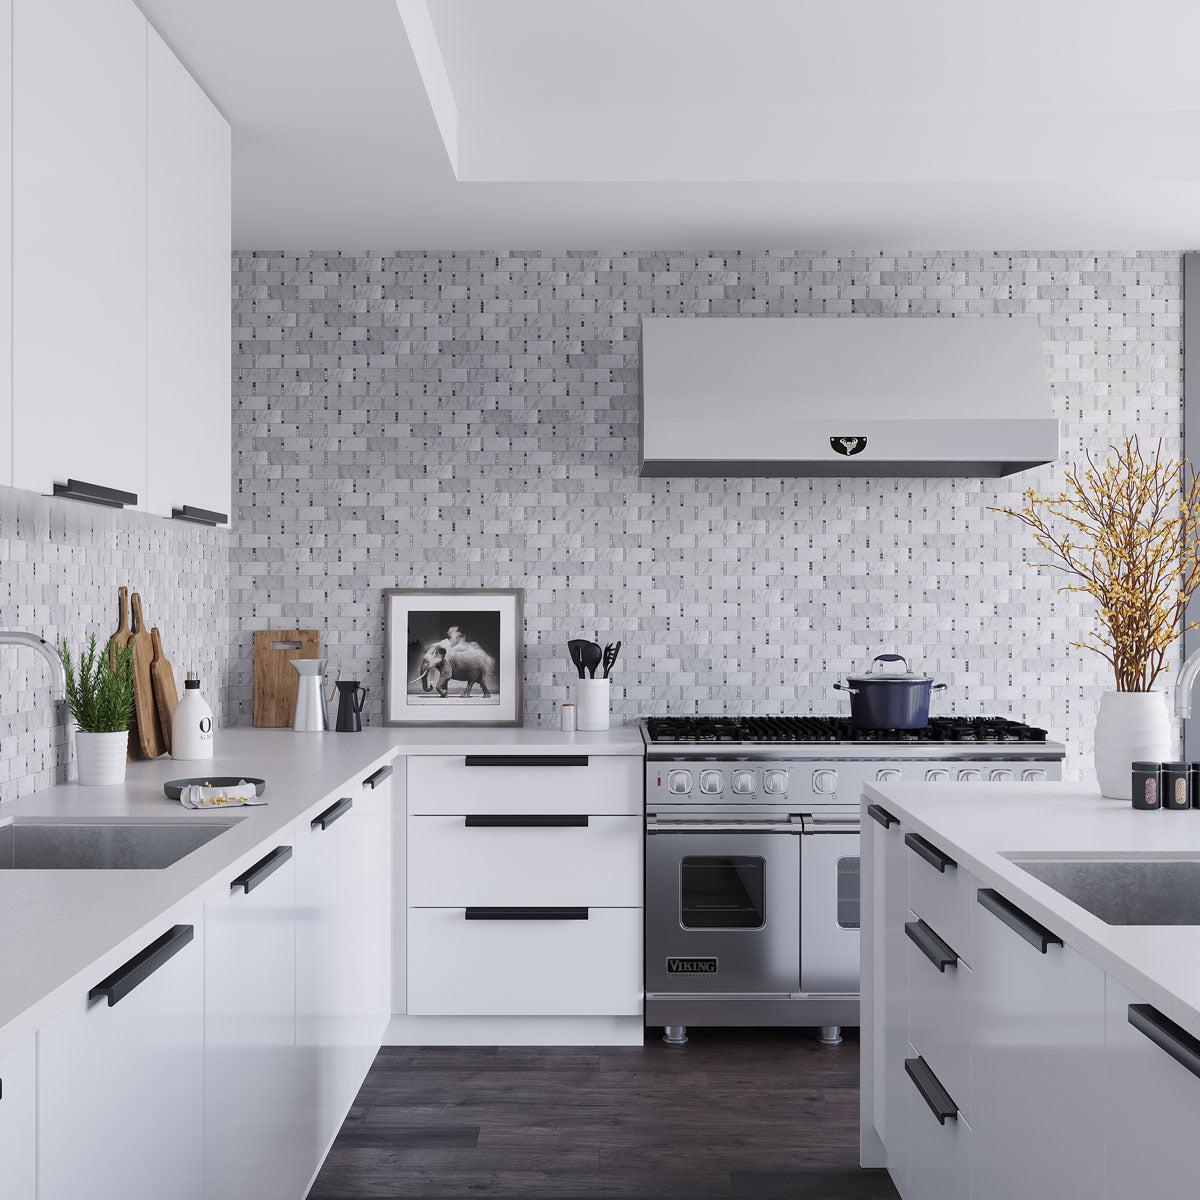 Carrara Subway Tile Backsplash With Bardiglio Dot Mosaic Tile for a Modern Kitchen